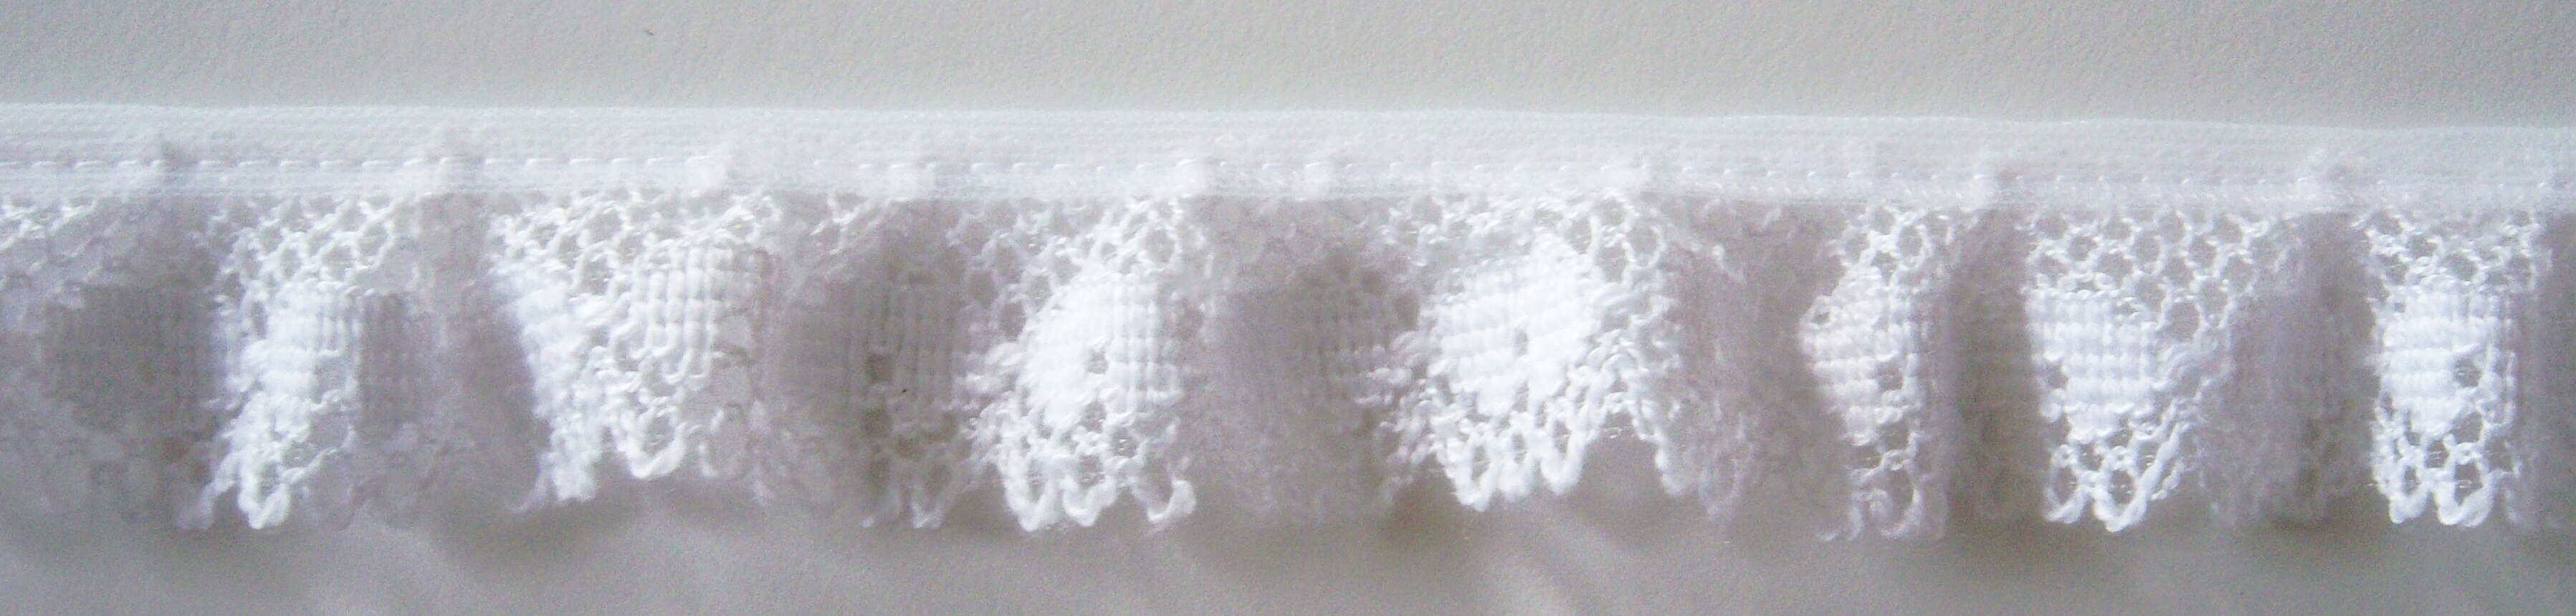 White 1" Ruffled Lace